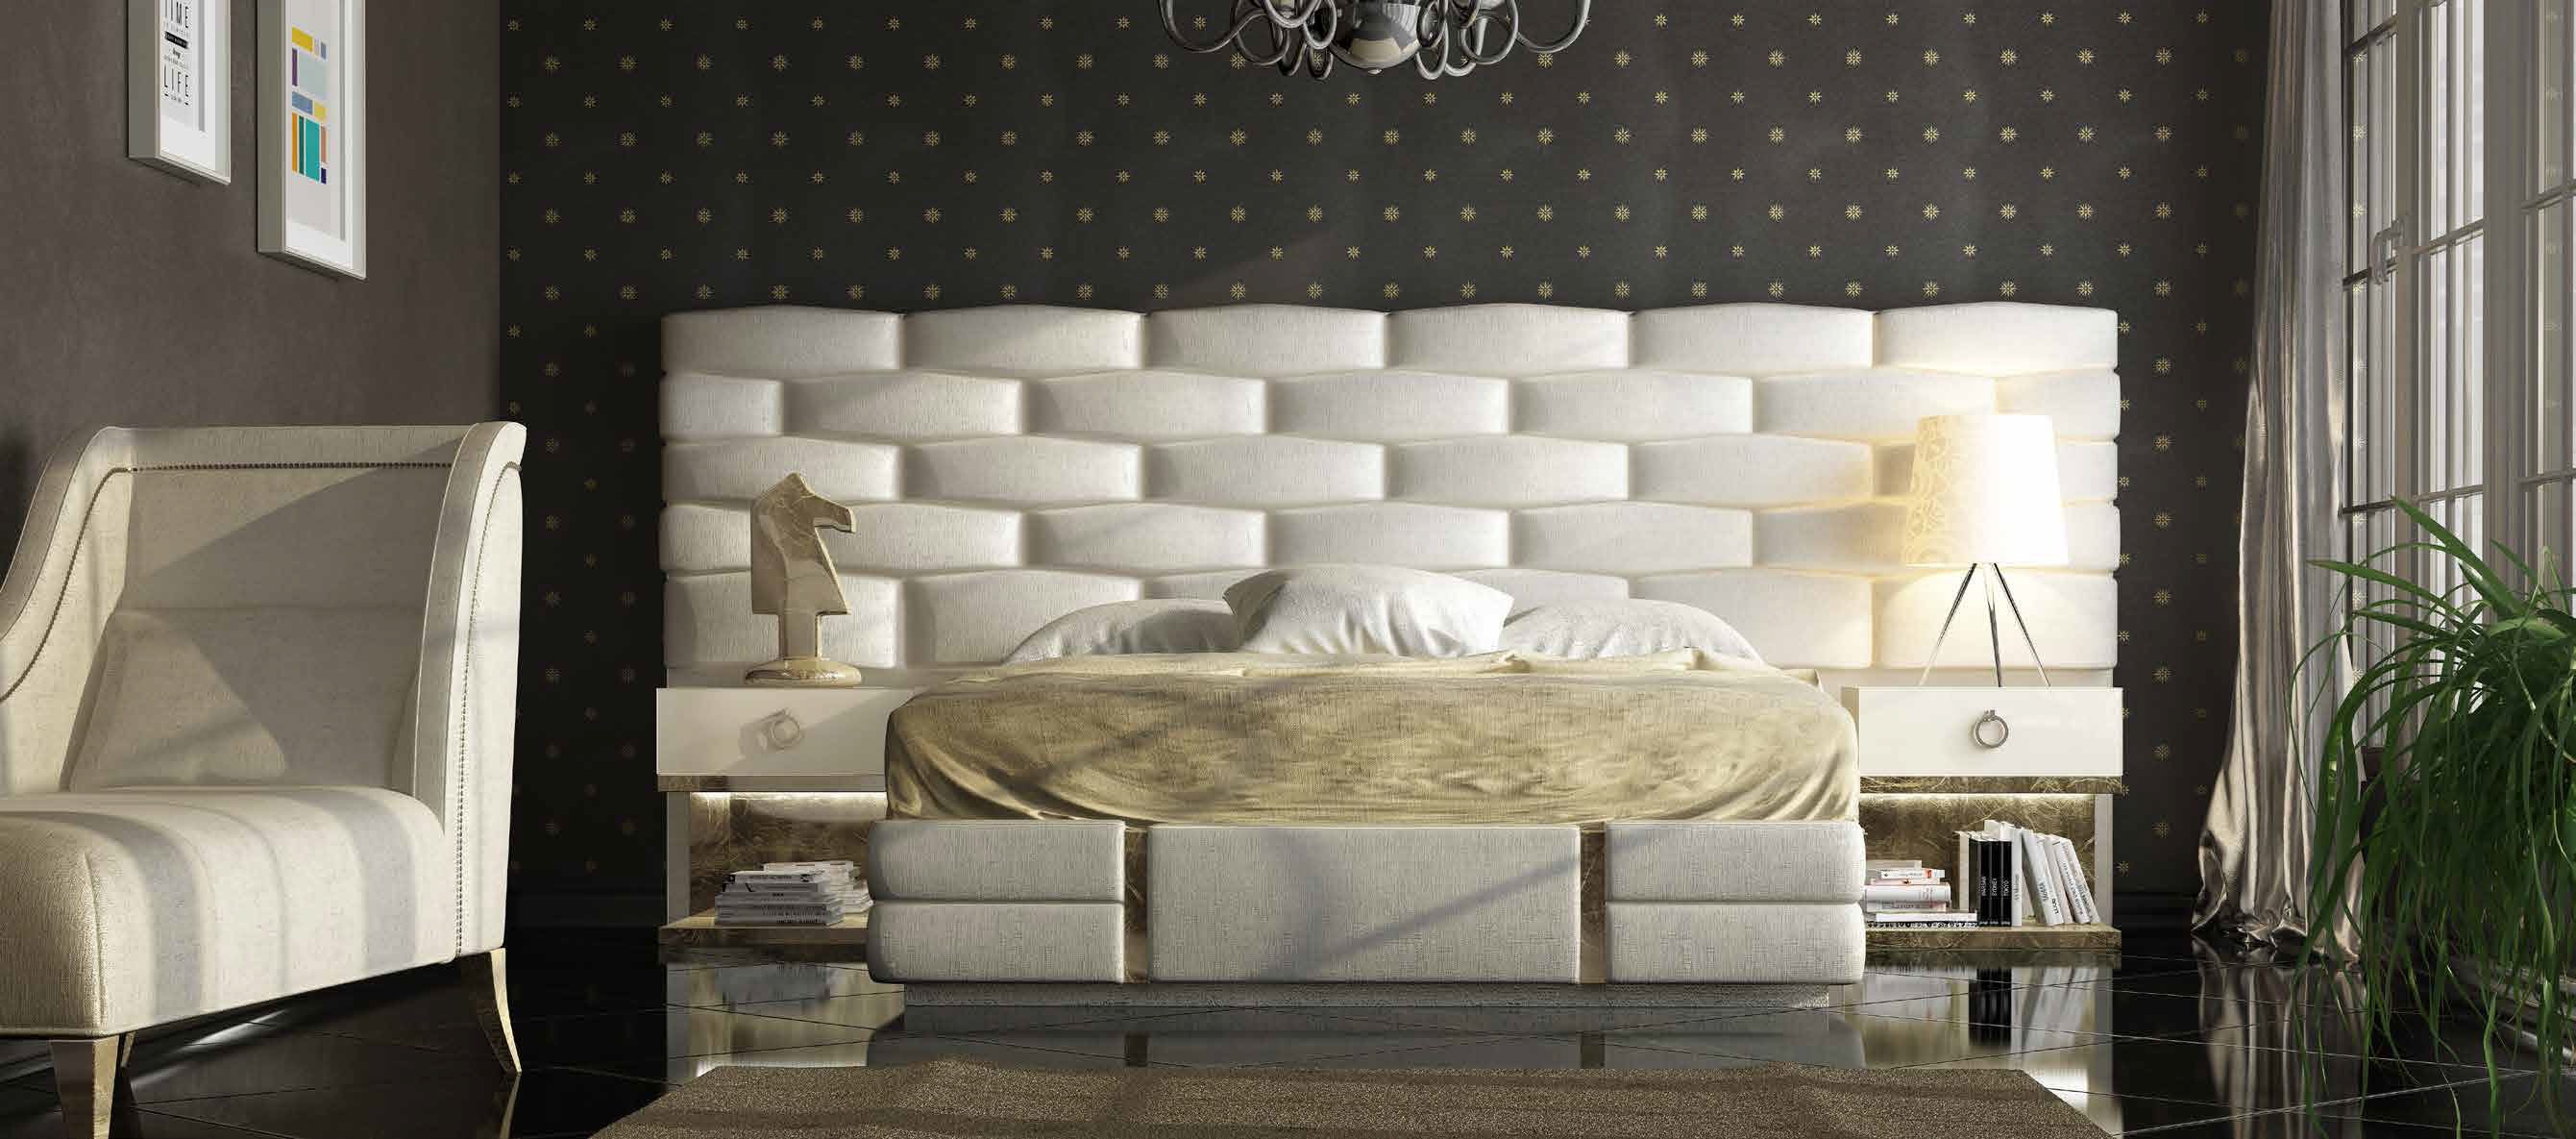 Brands Franco Furniture Bedrooms vol2, Spain DOR 37